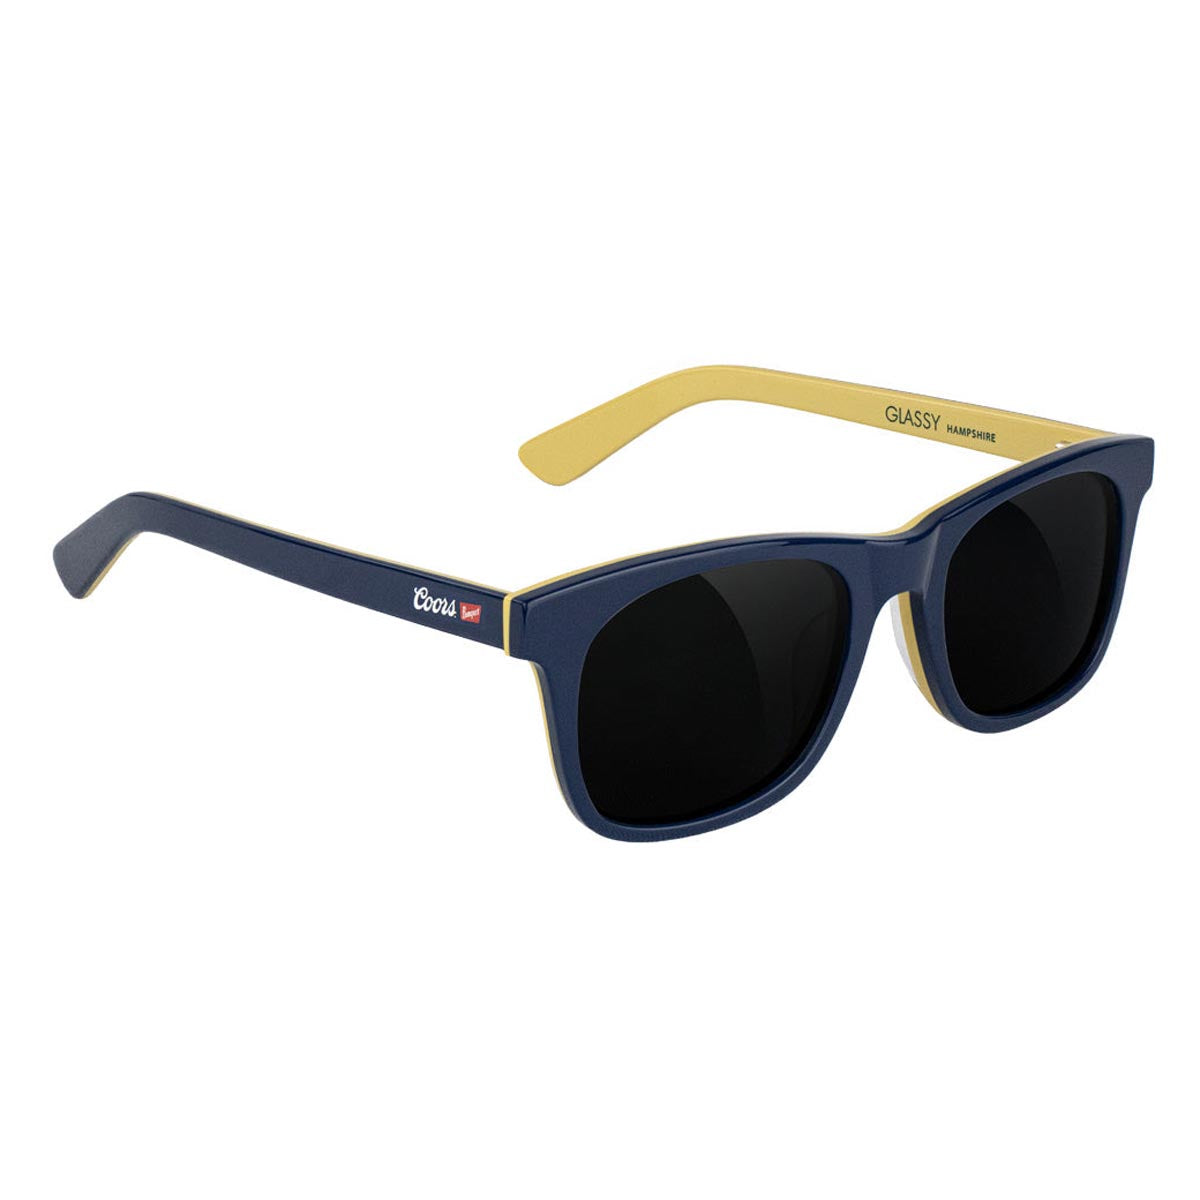 Glassy x Coors Banquet Hampshire Sunglasses - Blue image 1